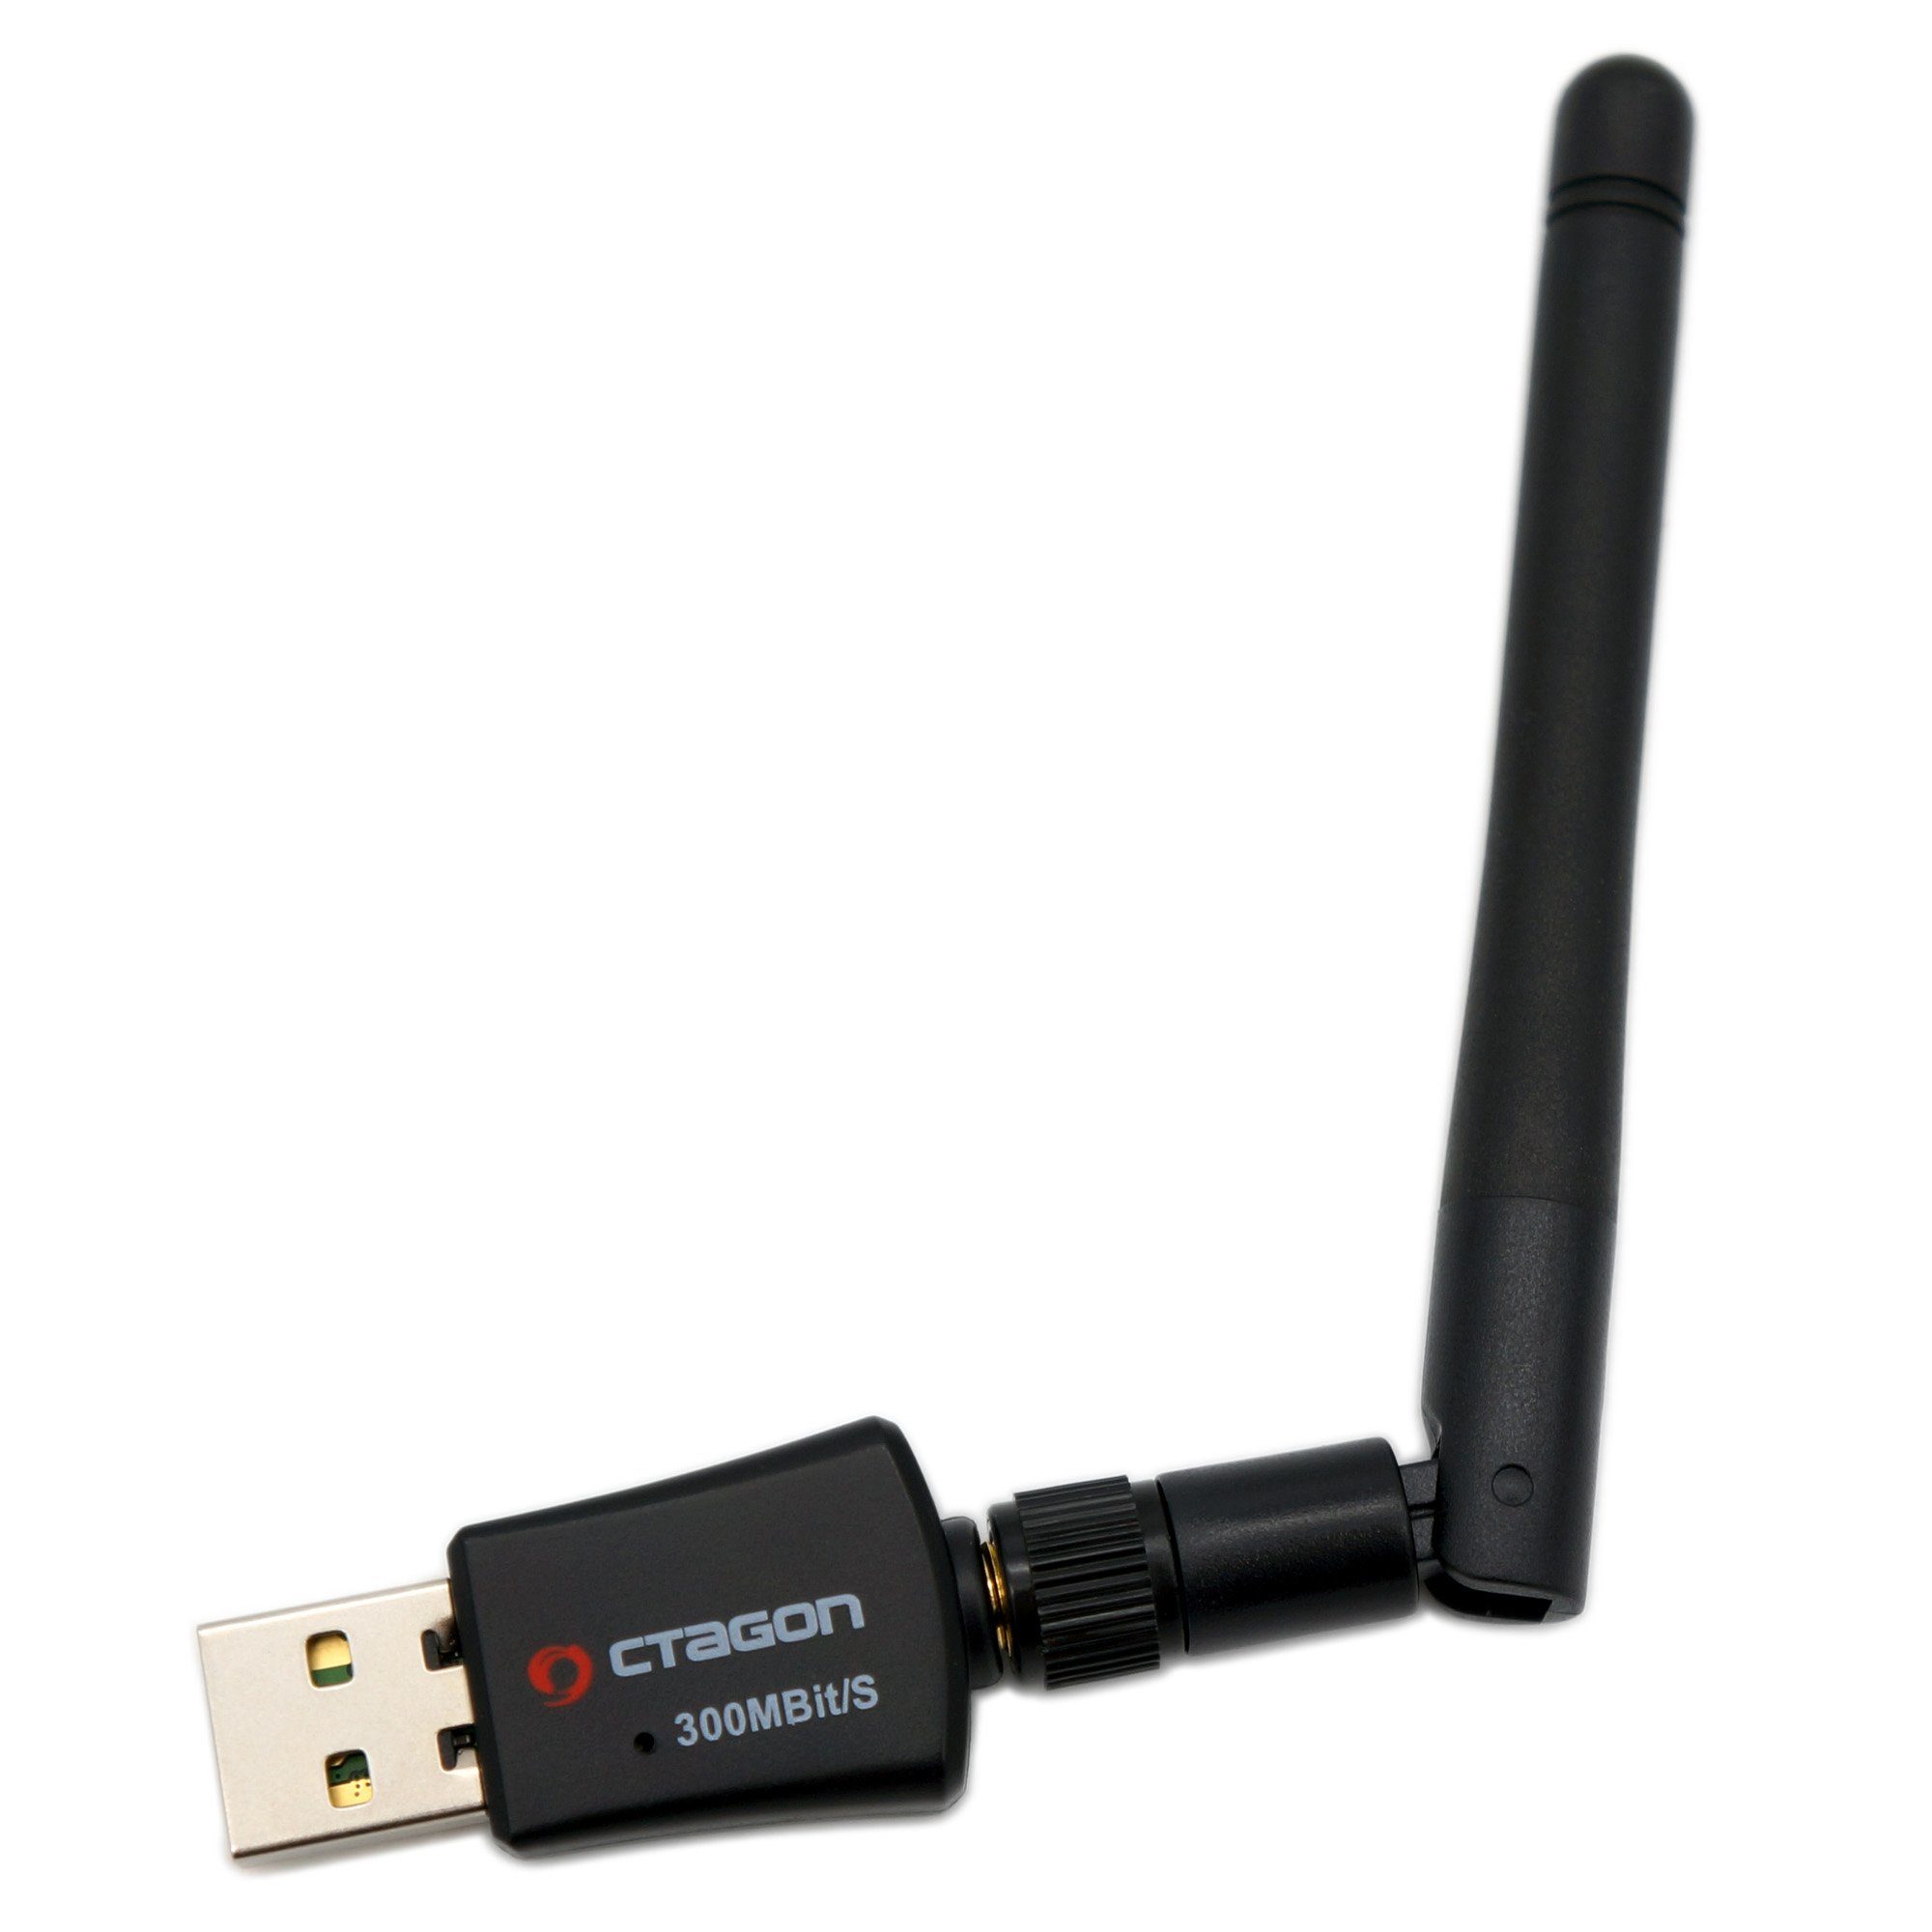 OCTAGON OCTAGON WL318 WLAN 300 Mbit/s +2dBi Antenne USB 2.0 Adapter Blister  SAT-Receiver